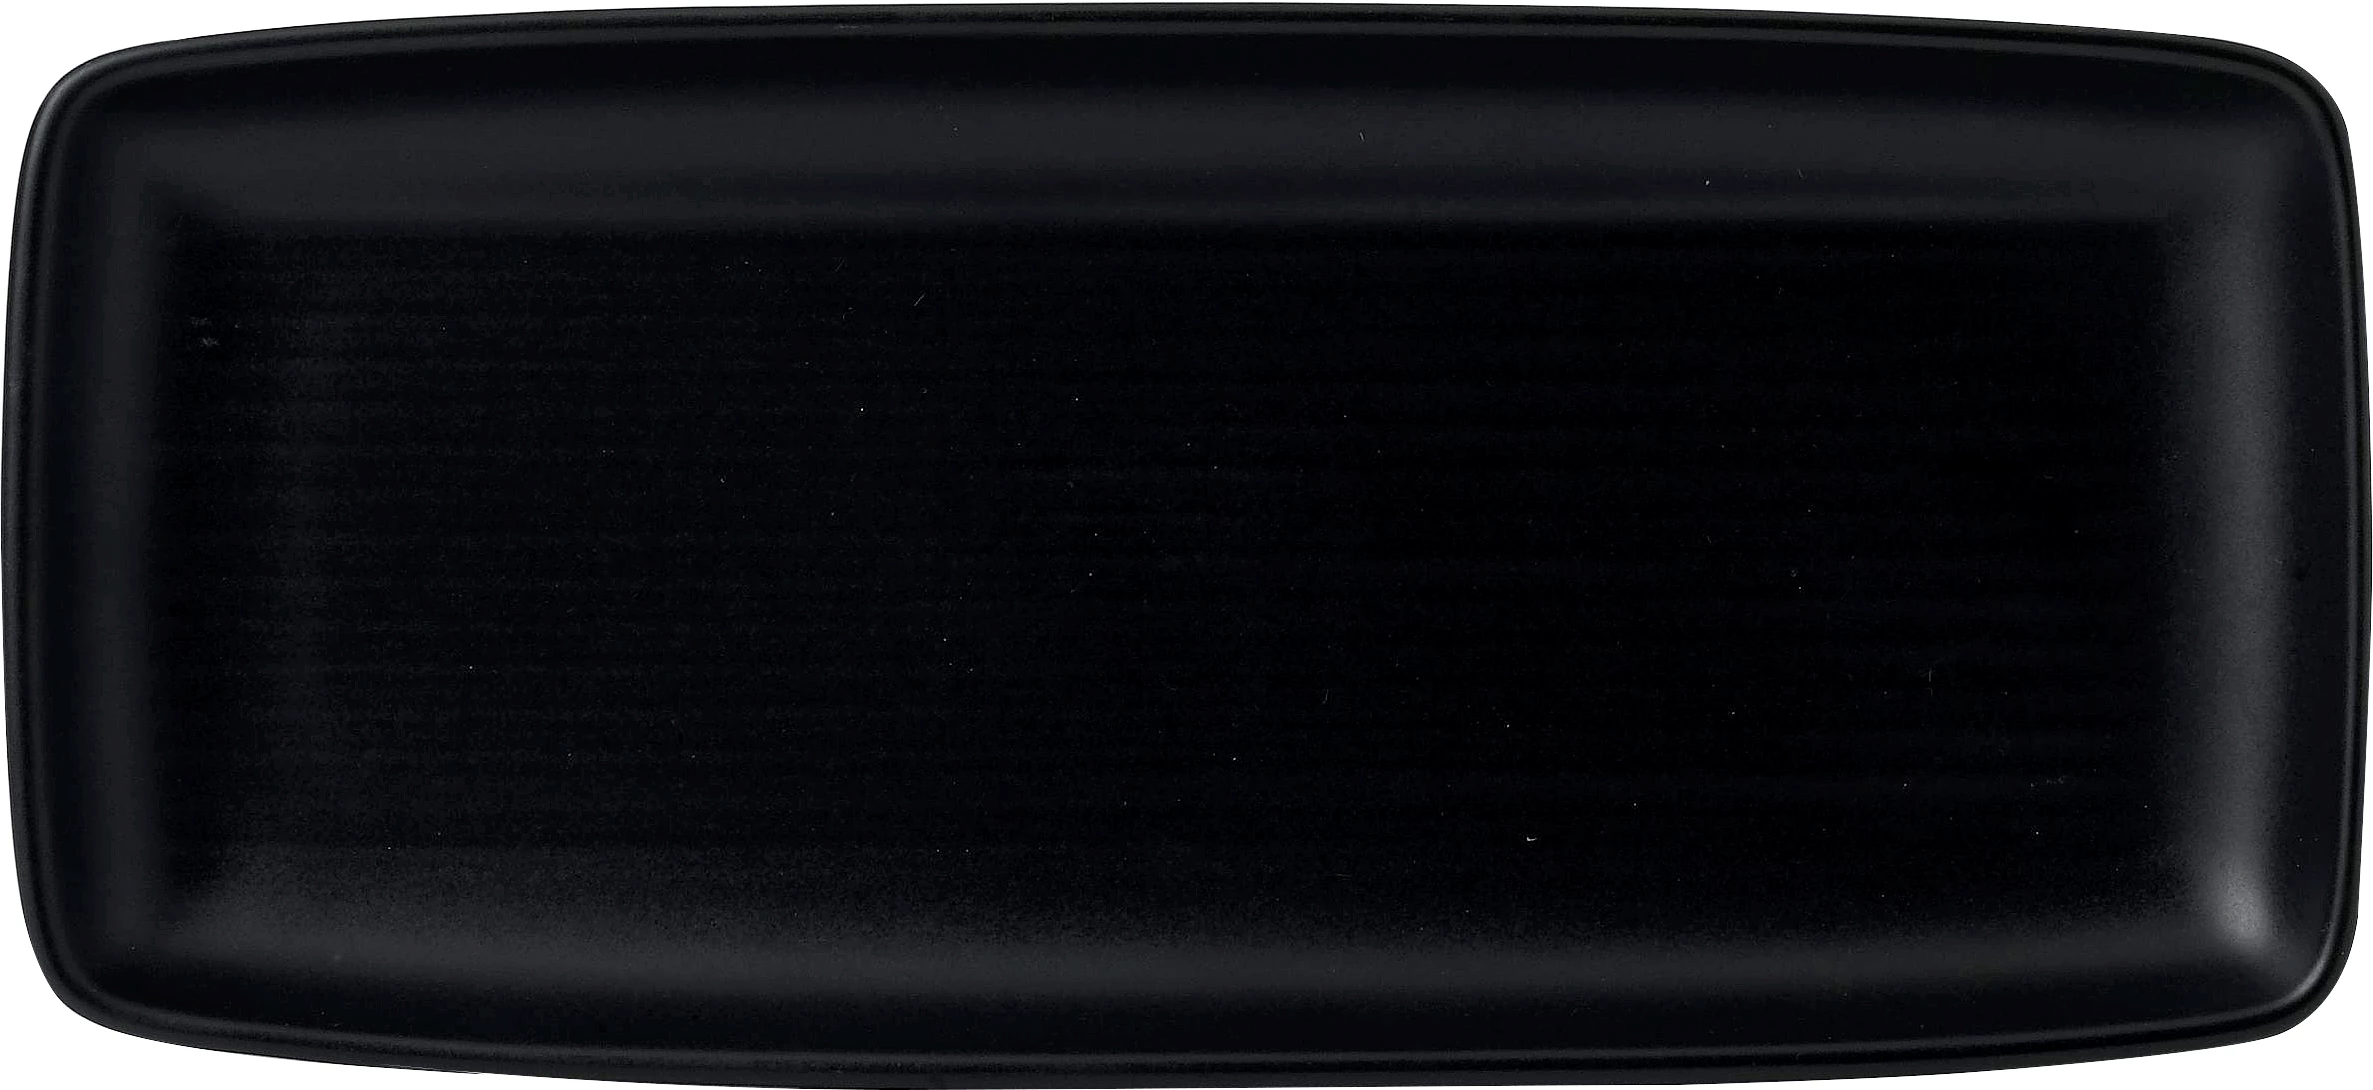 Dudson Evo Jet fad, rektangulært, sort, 27,2 x 12,5 cm